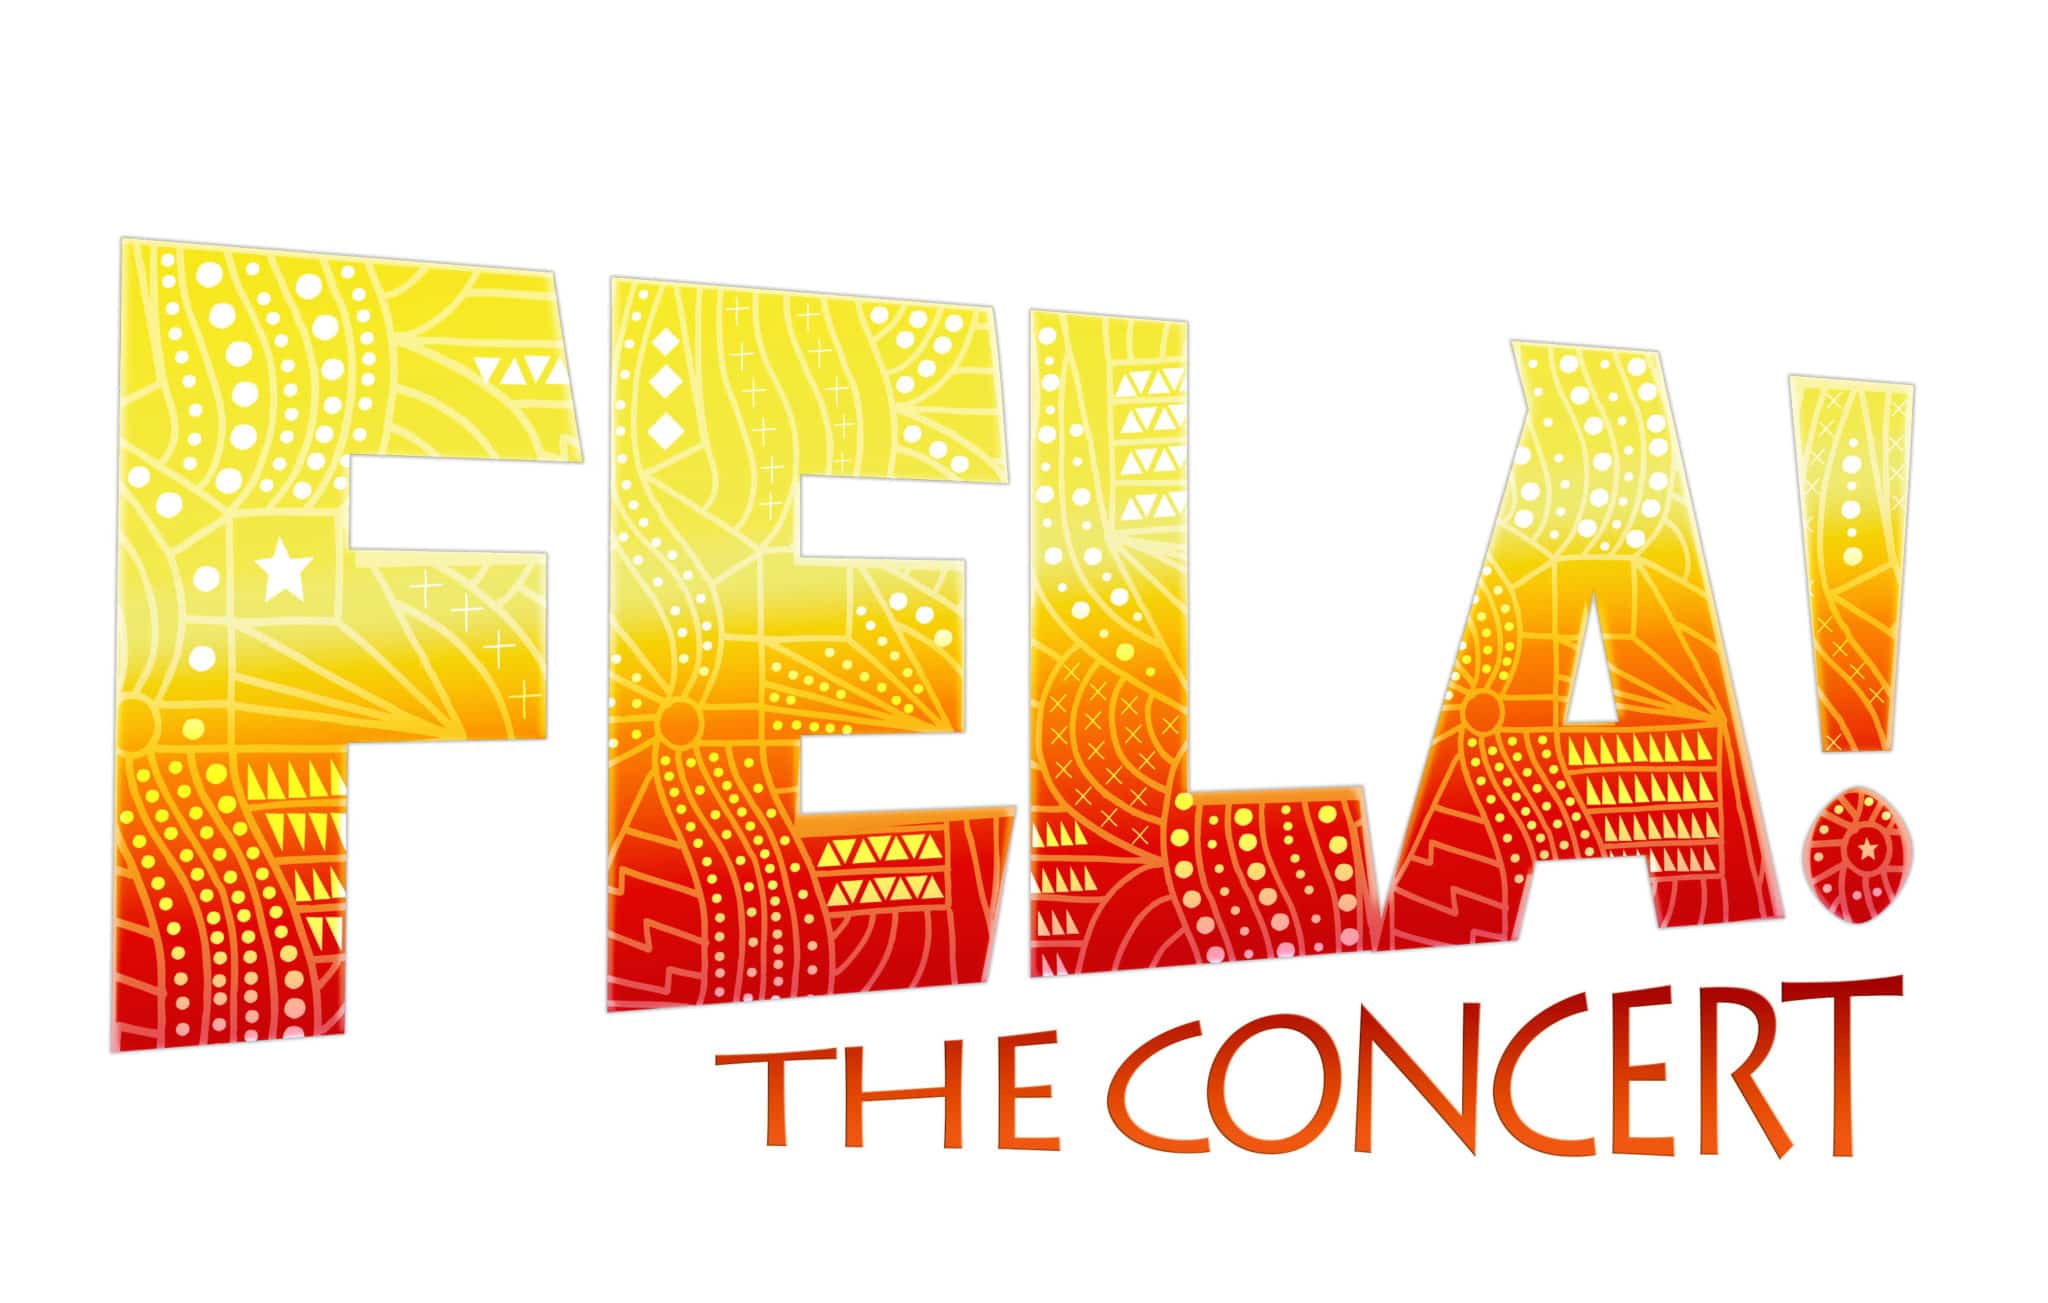 FELA! The Concert